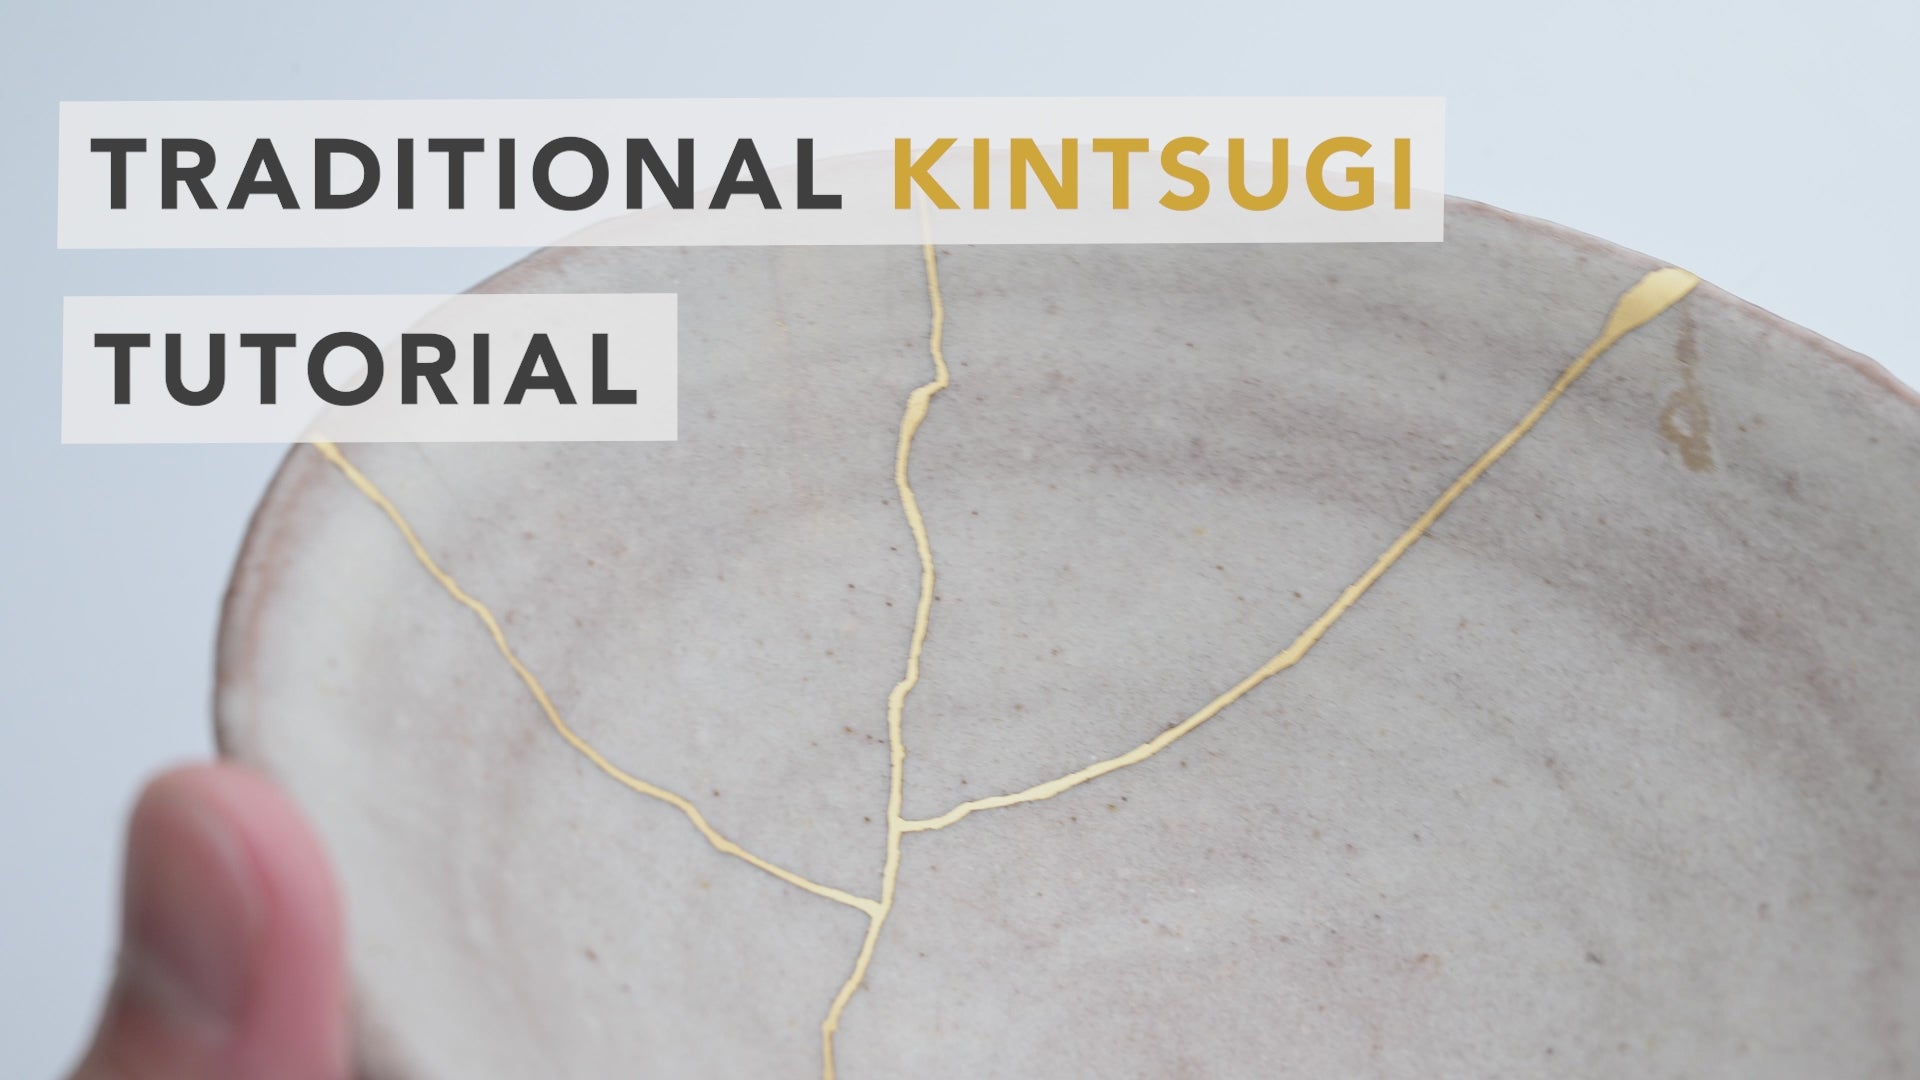 Chimahaga Basic Kintsugi Kit - Food Safe - Japanese traditional